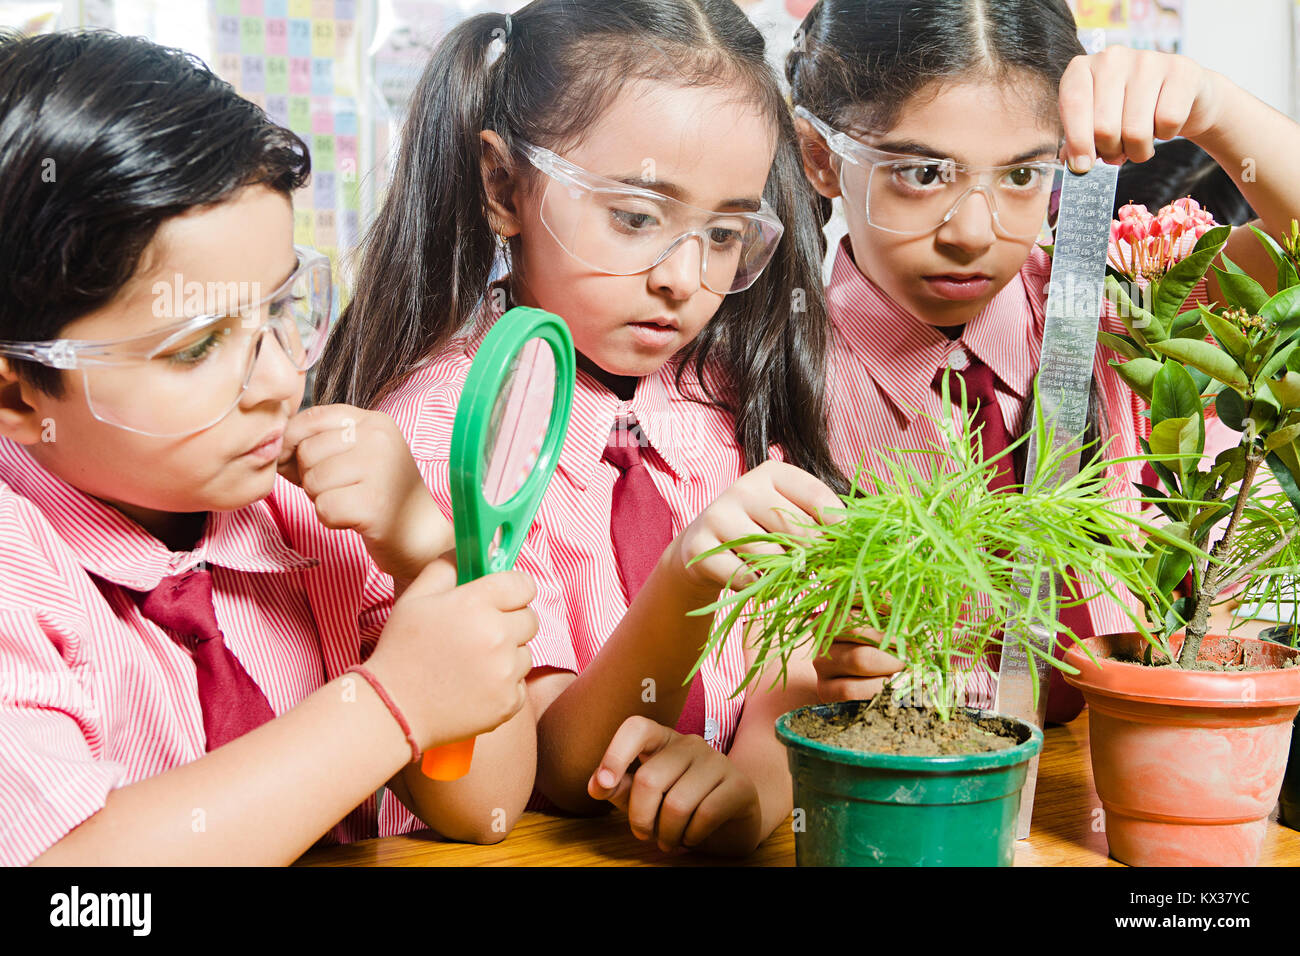 Schule Kinder Studenten Lineal messen Pflanze Kontrolle Umwelt - Besorgnis Stockfoto